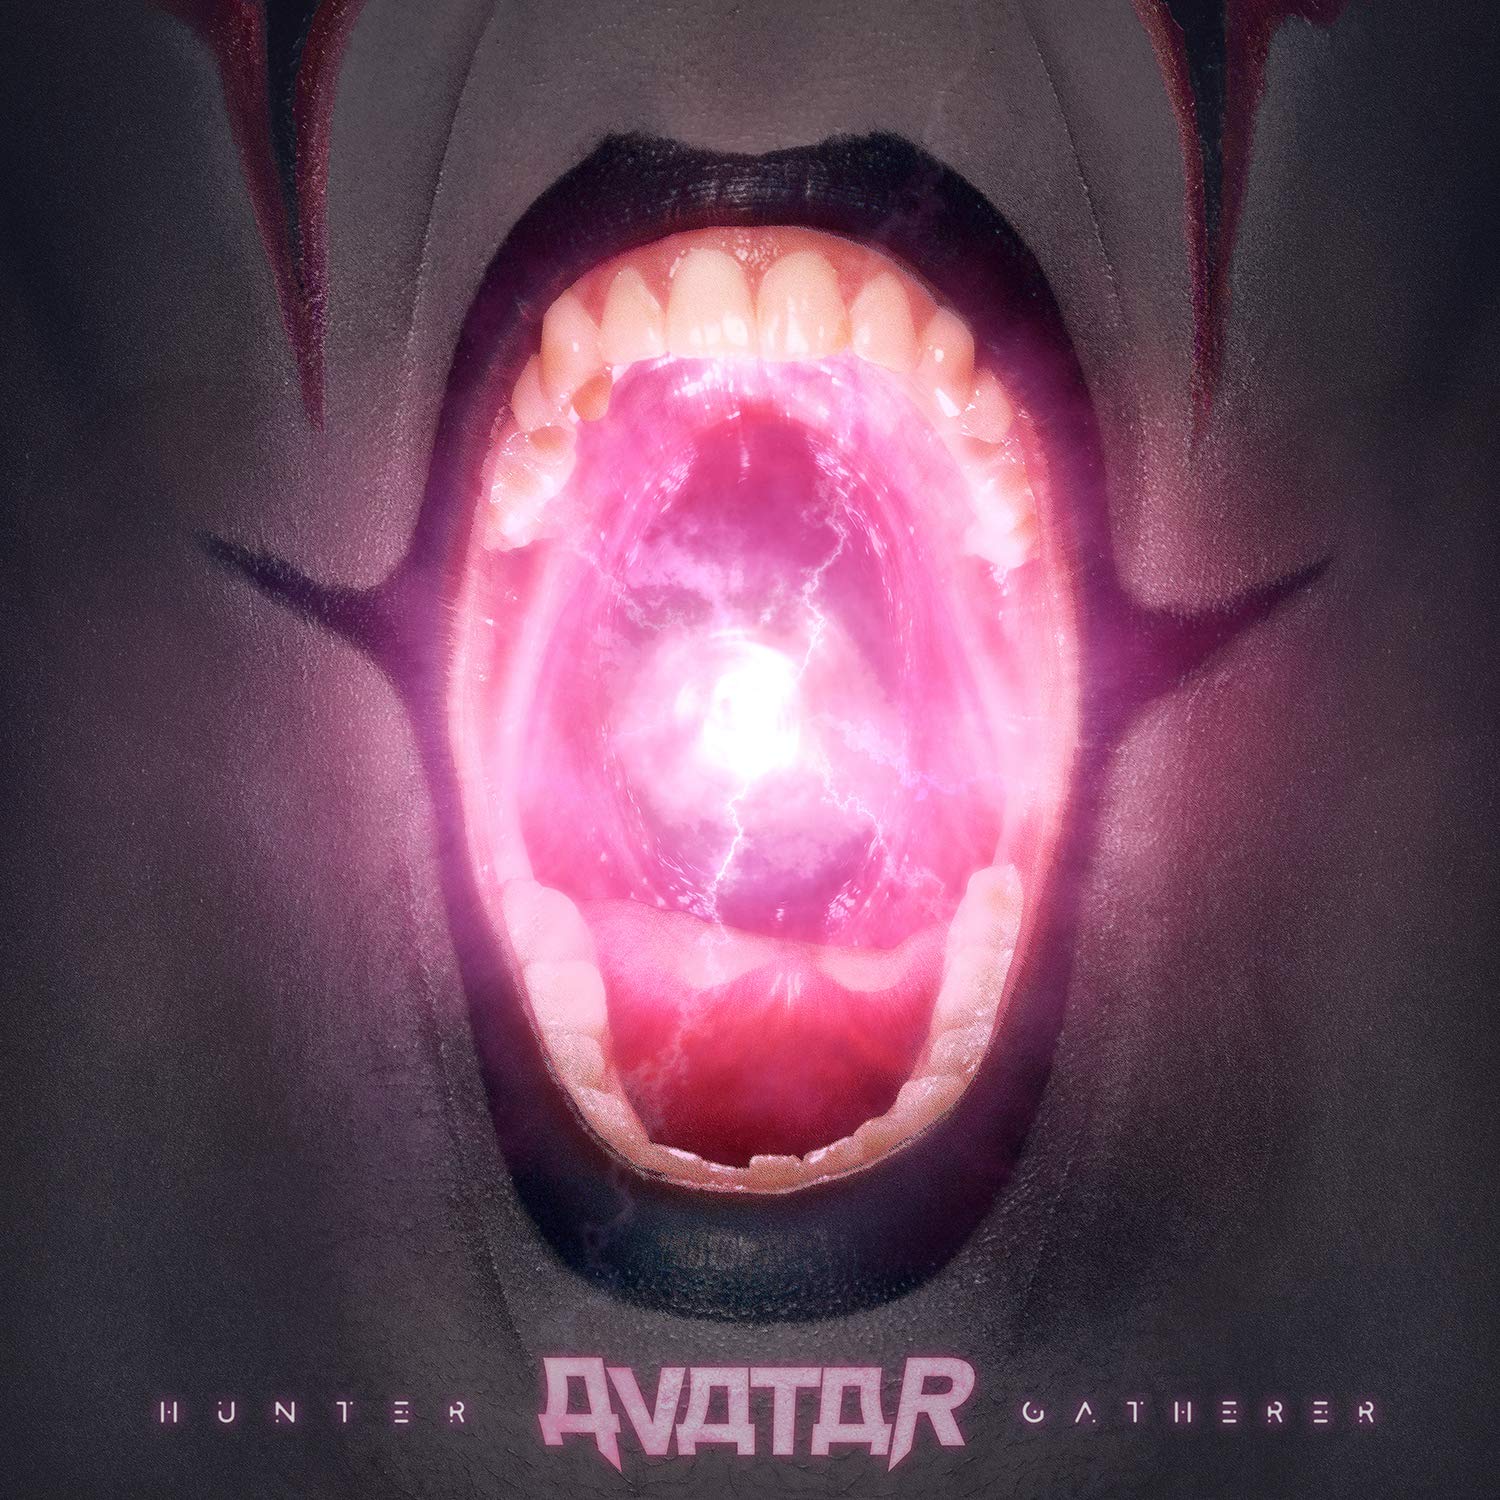 Avatar - Hunter Gatherer. Gatefold LP/CD